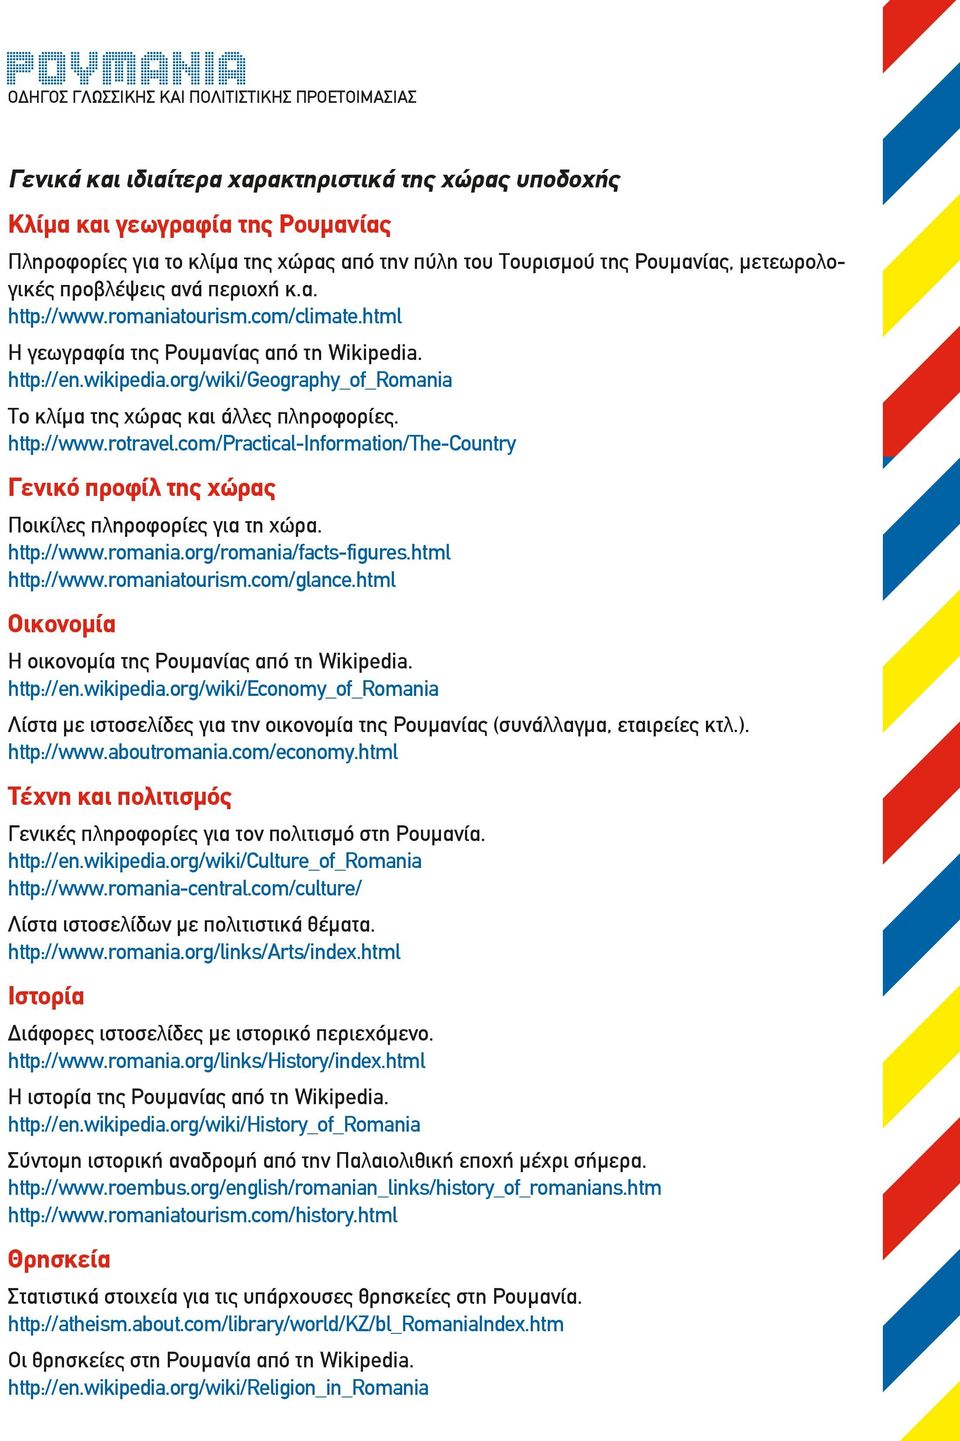 http://www.rotravel.com/practical-information/the-country Γενικό προφίλ της χώρας Ποικίλες πληροφορίες για τη χώρα. http://www.romania.org/romania/facts-figures.html http://www.romaniatourism.